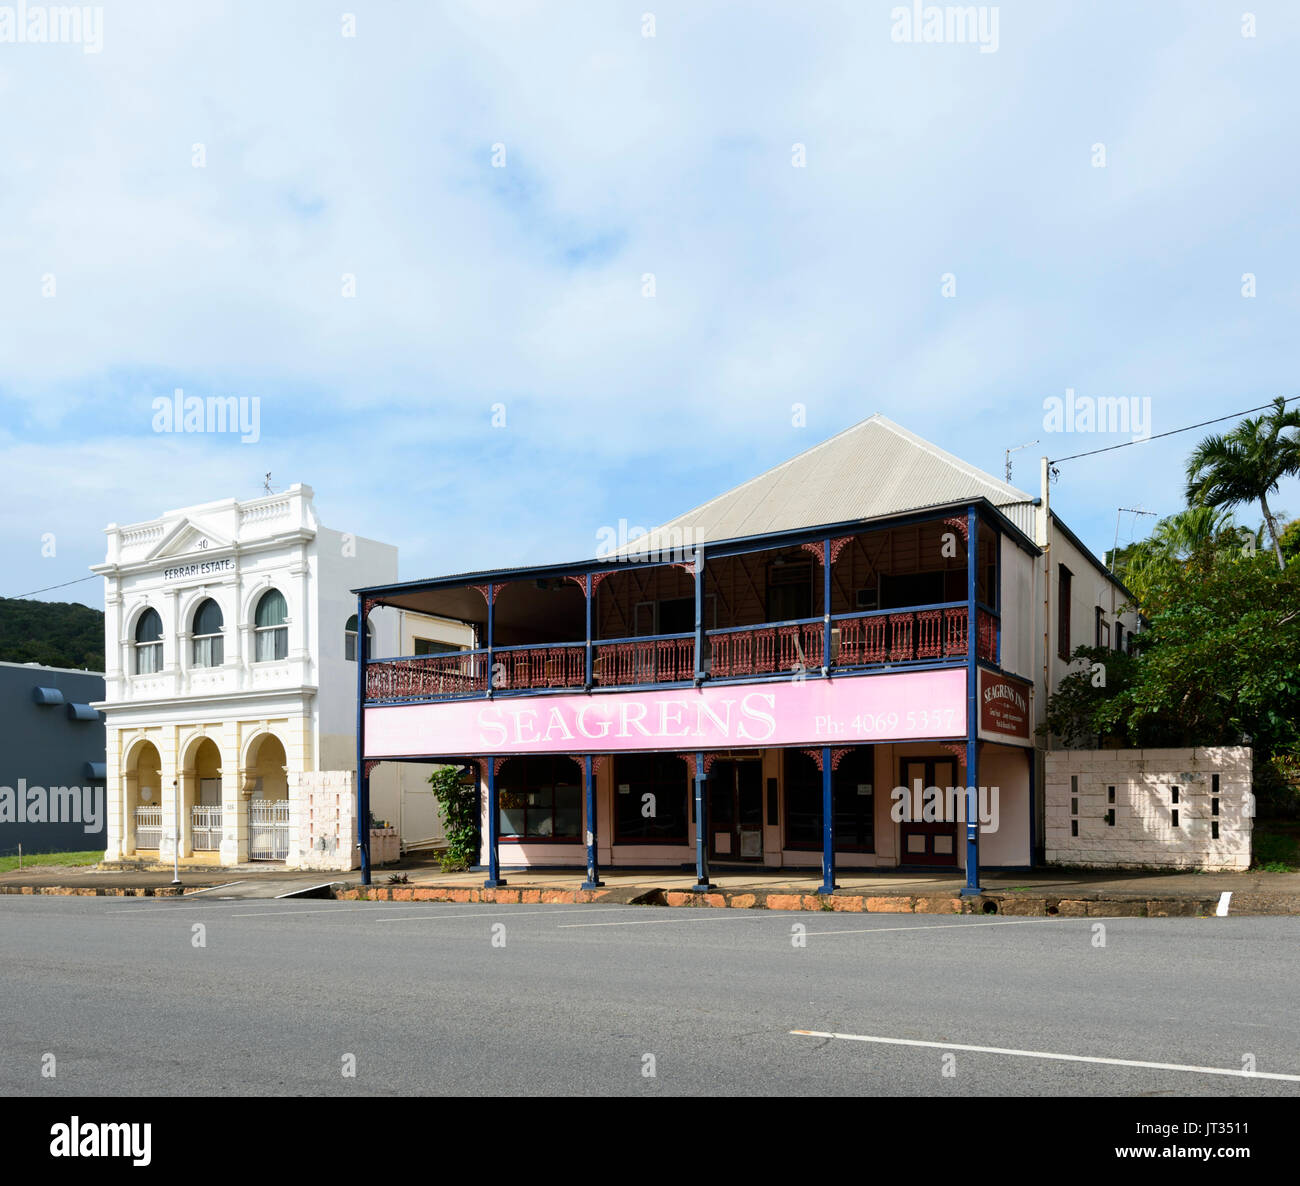 Seagren historique's Building, rue Charlotte, Cooktown, Far North Queensland, Queensland, Australie, FNQ Banque D'Images